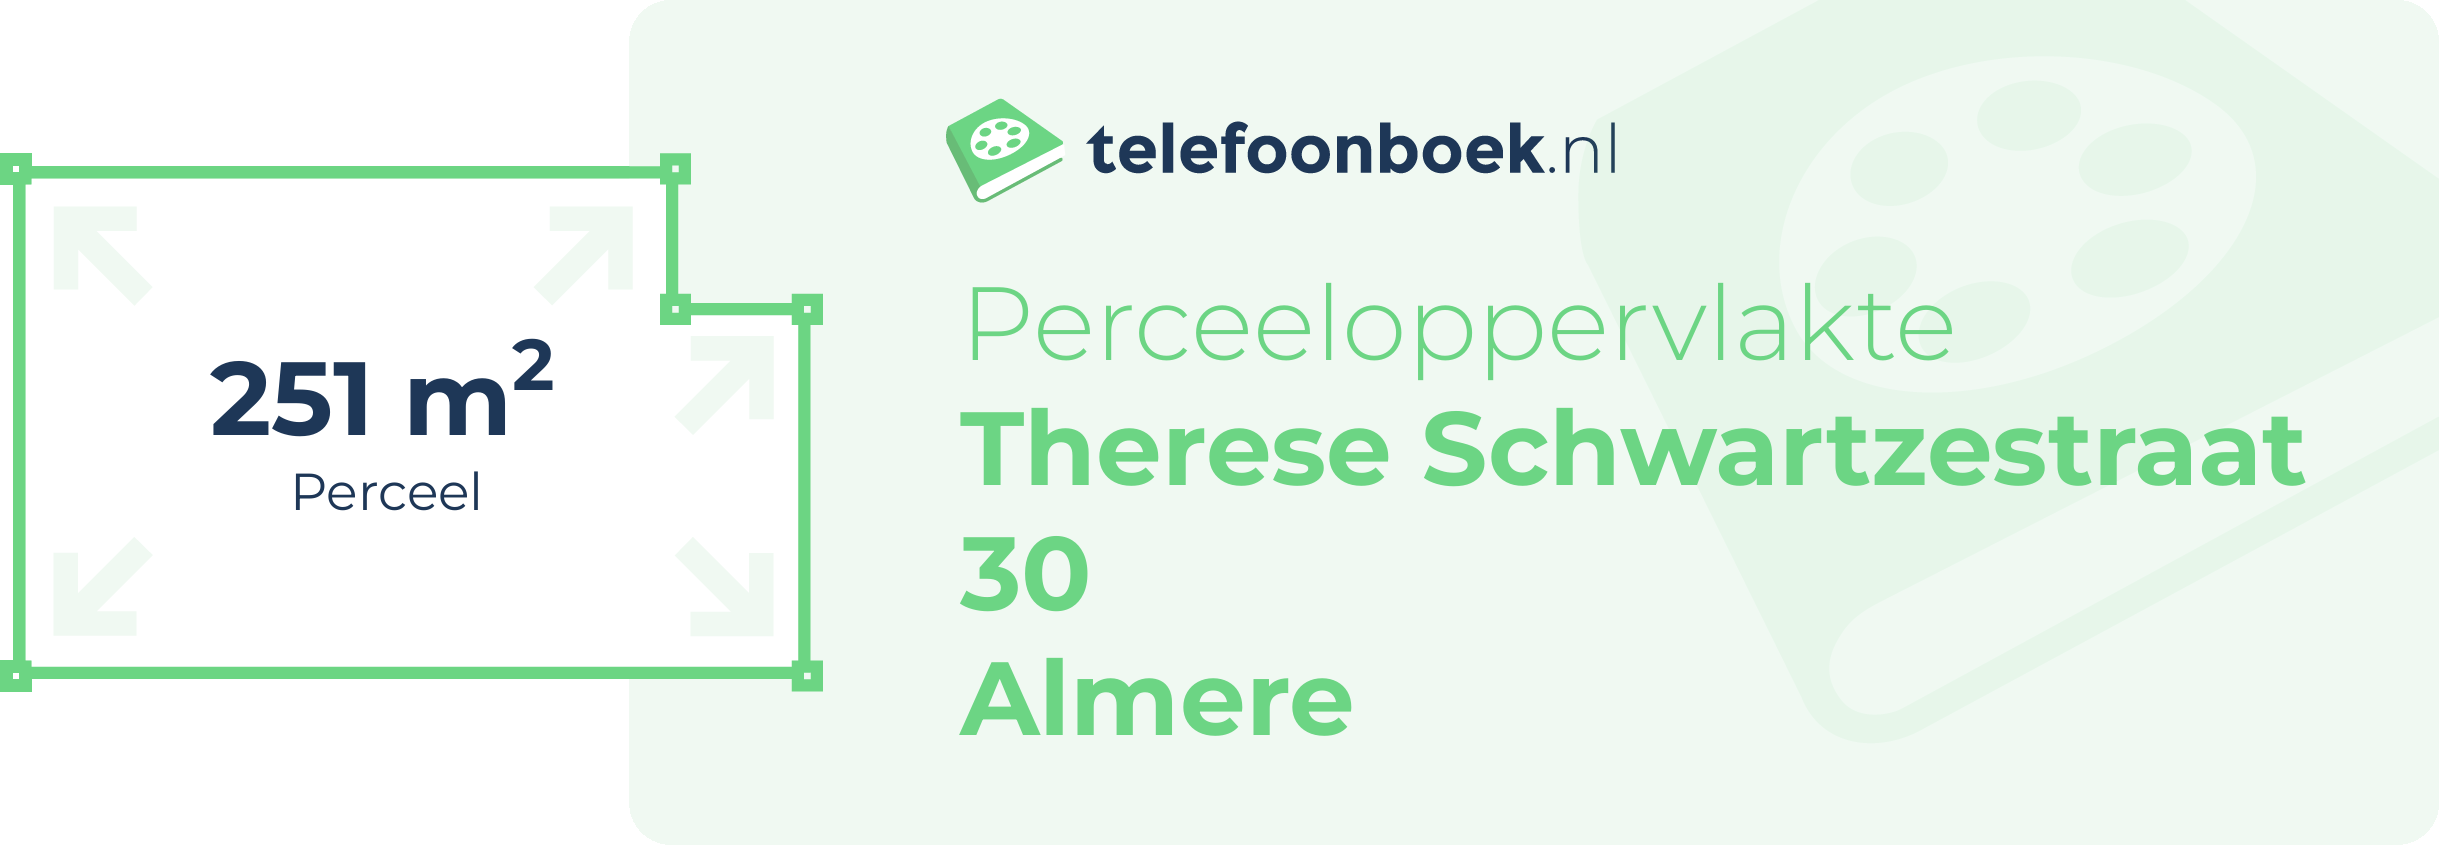 Perceeloppervlakte Therese Schwartzestraat 30 Almere